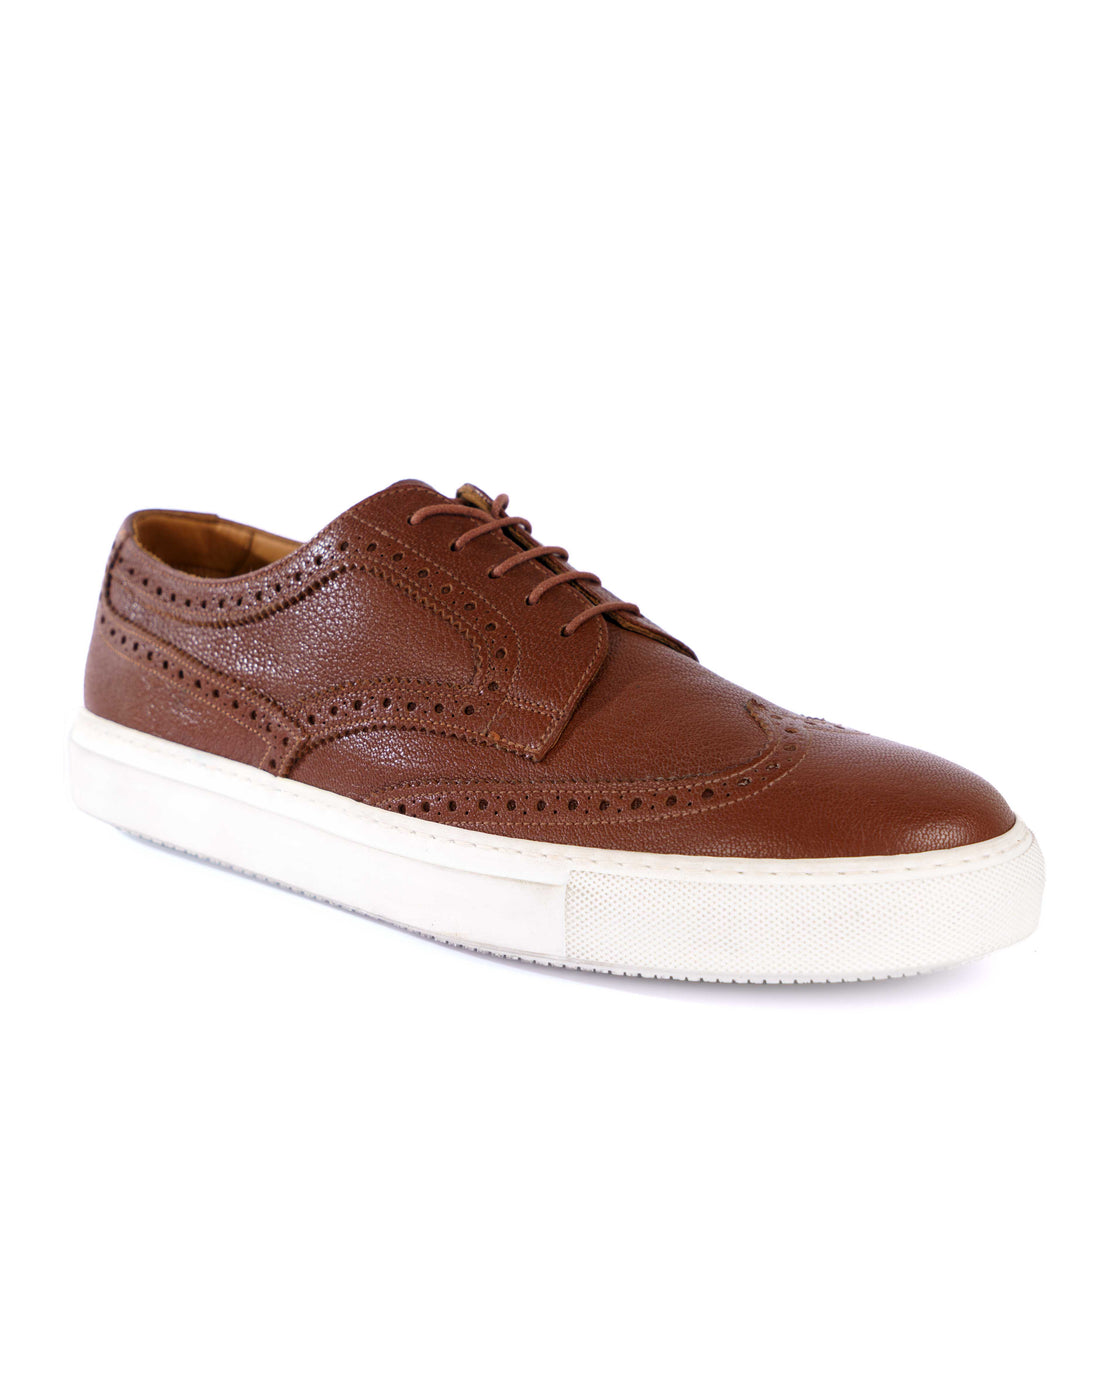 Brown Sneaker Shoes